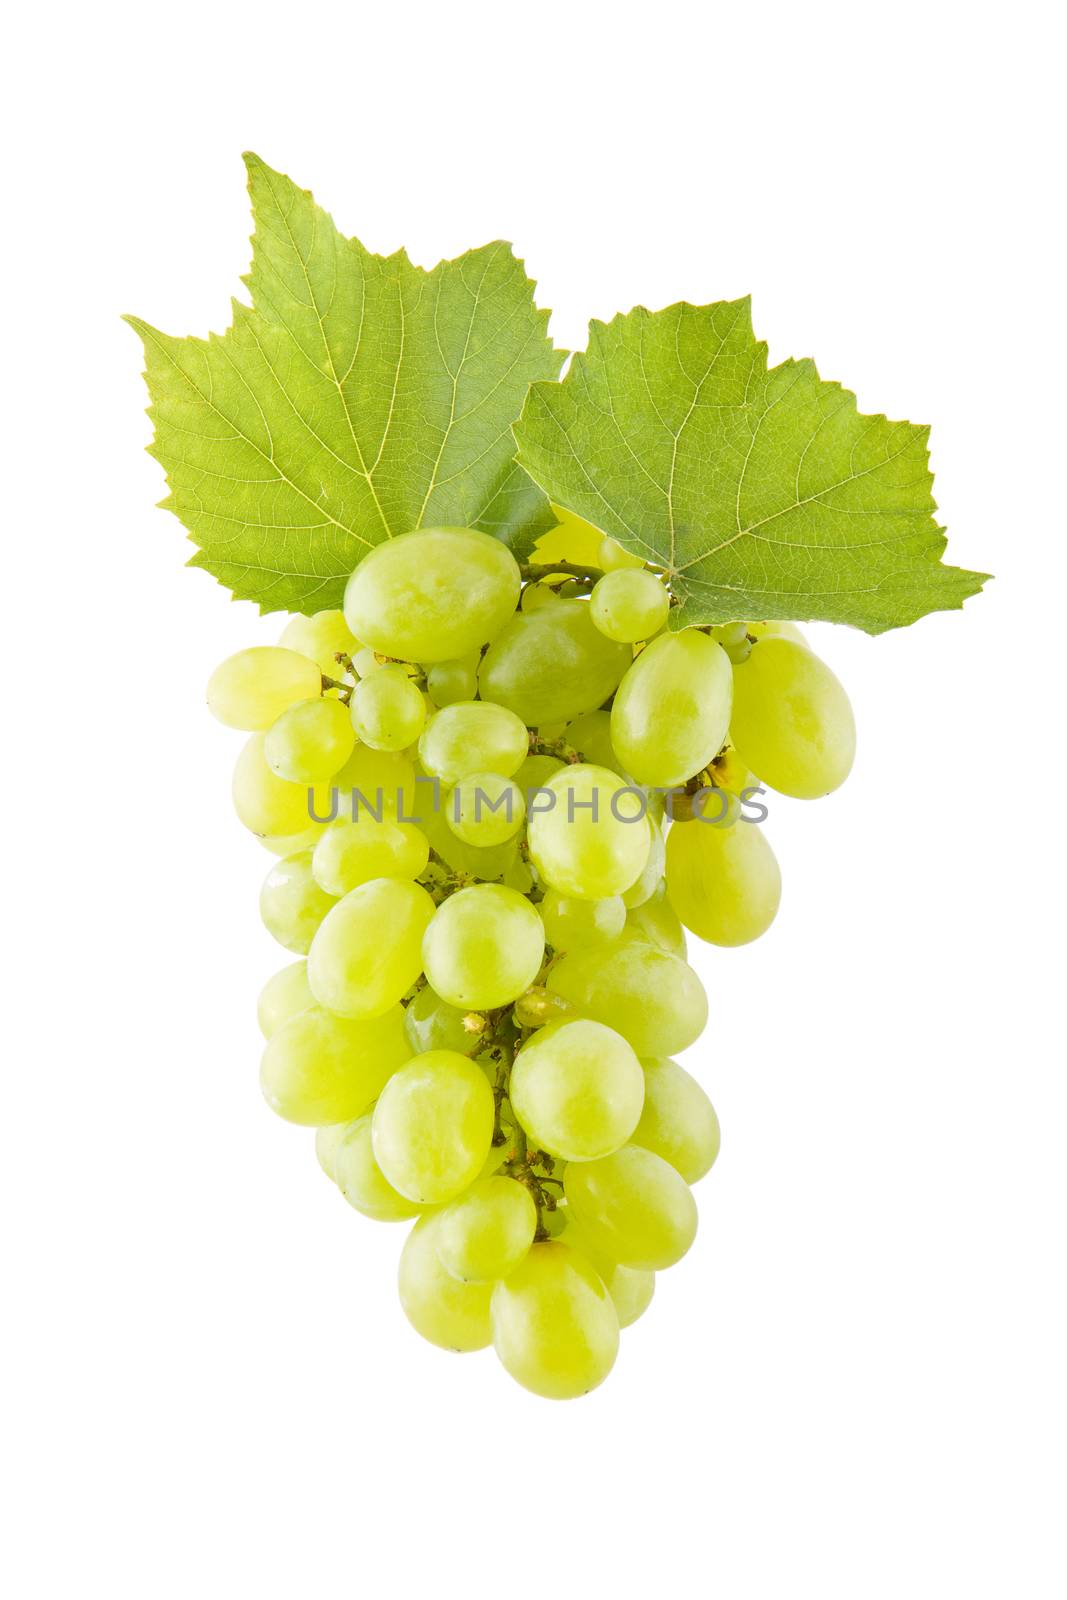 Grapes on white by Gbuglok